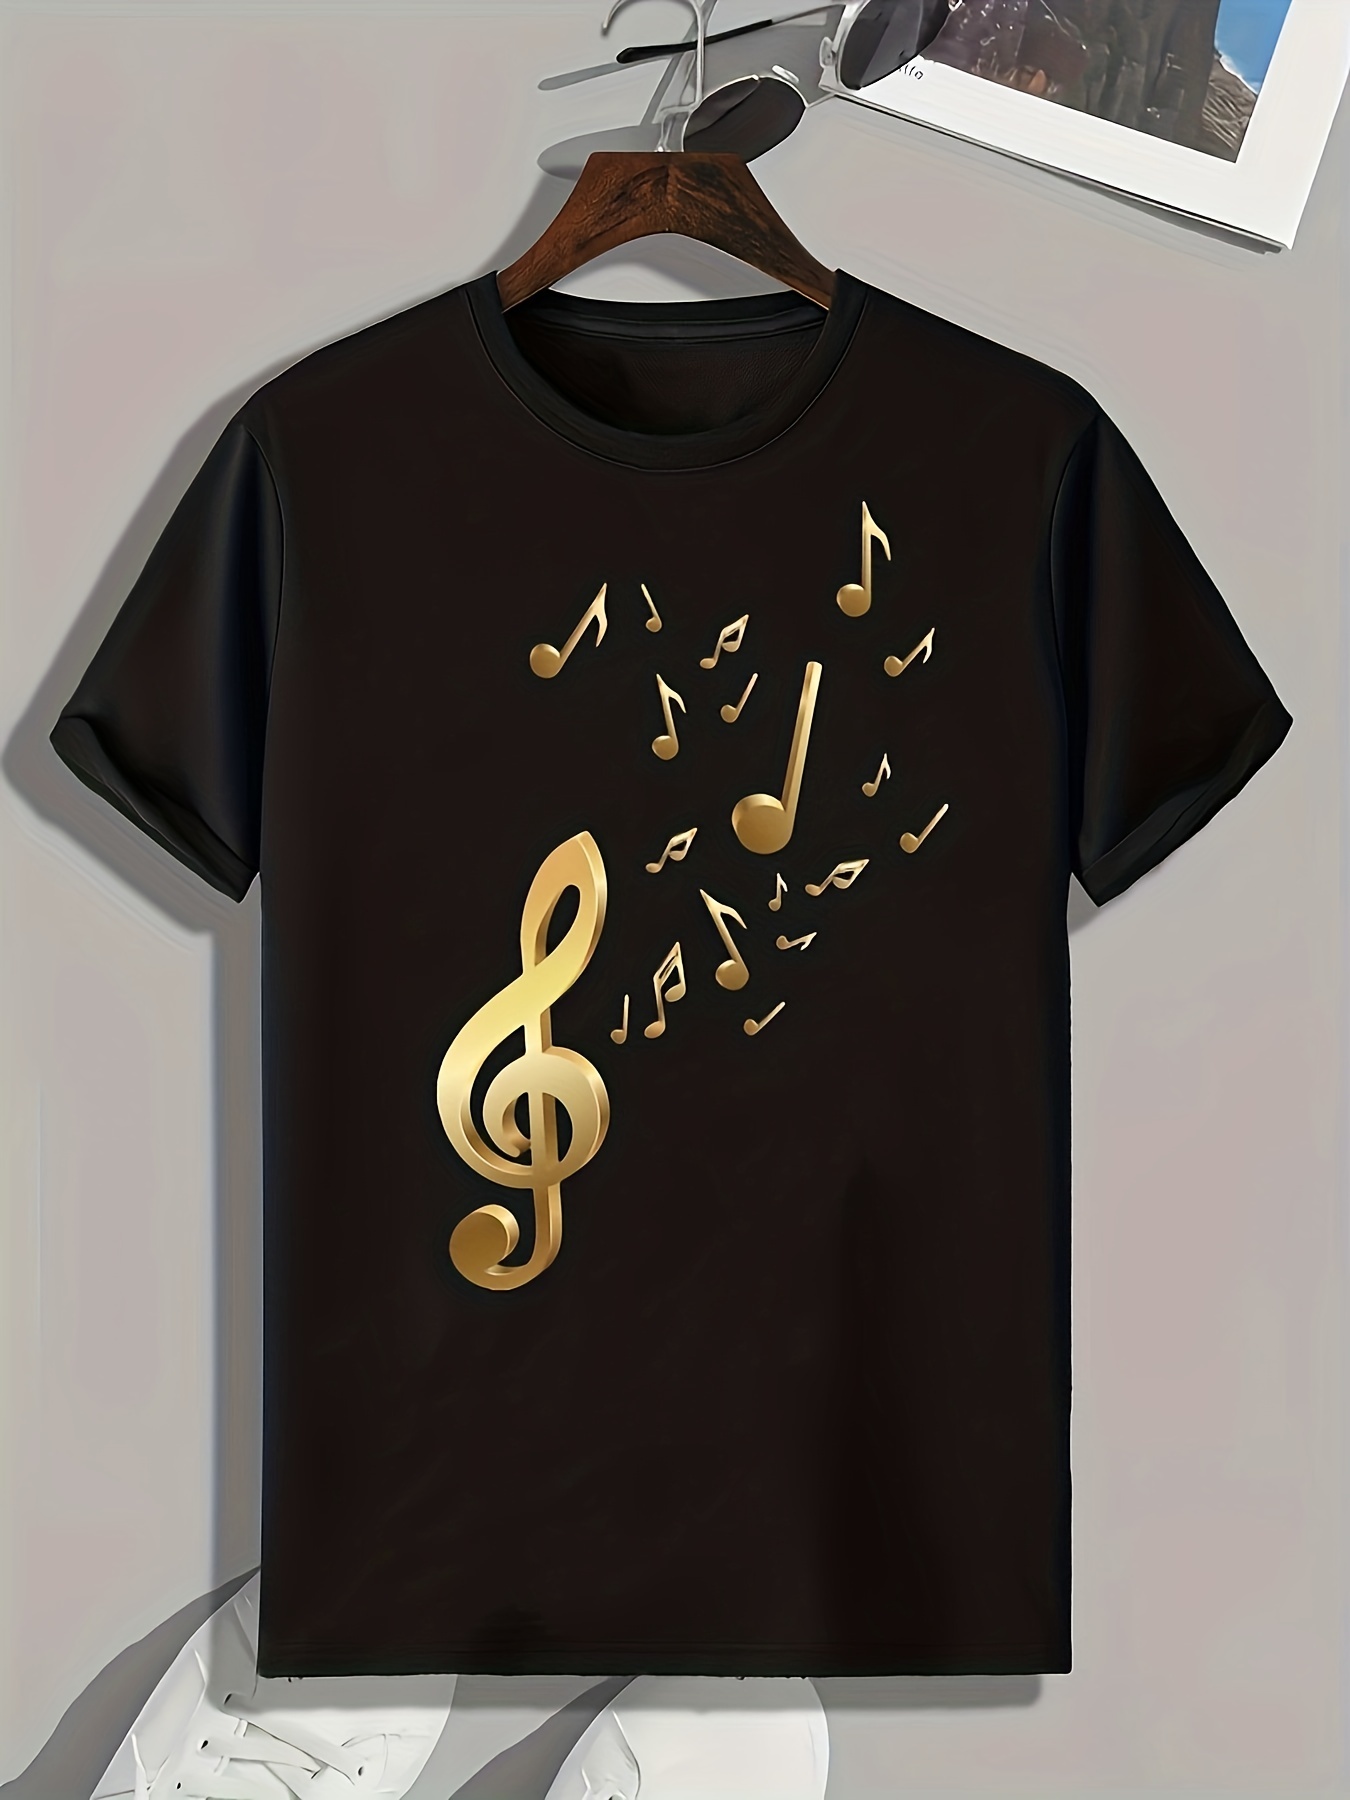 Camiseta Hombre Nota musical Música Clave Sol Casual Manga Larga Amarillo  Tee